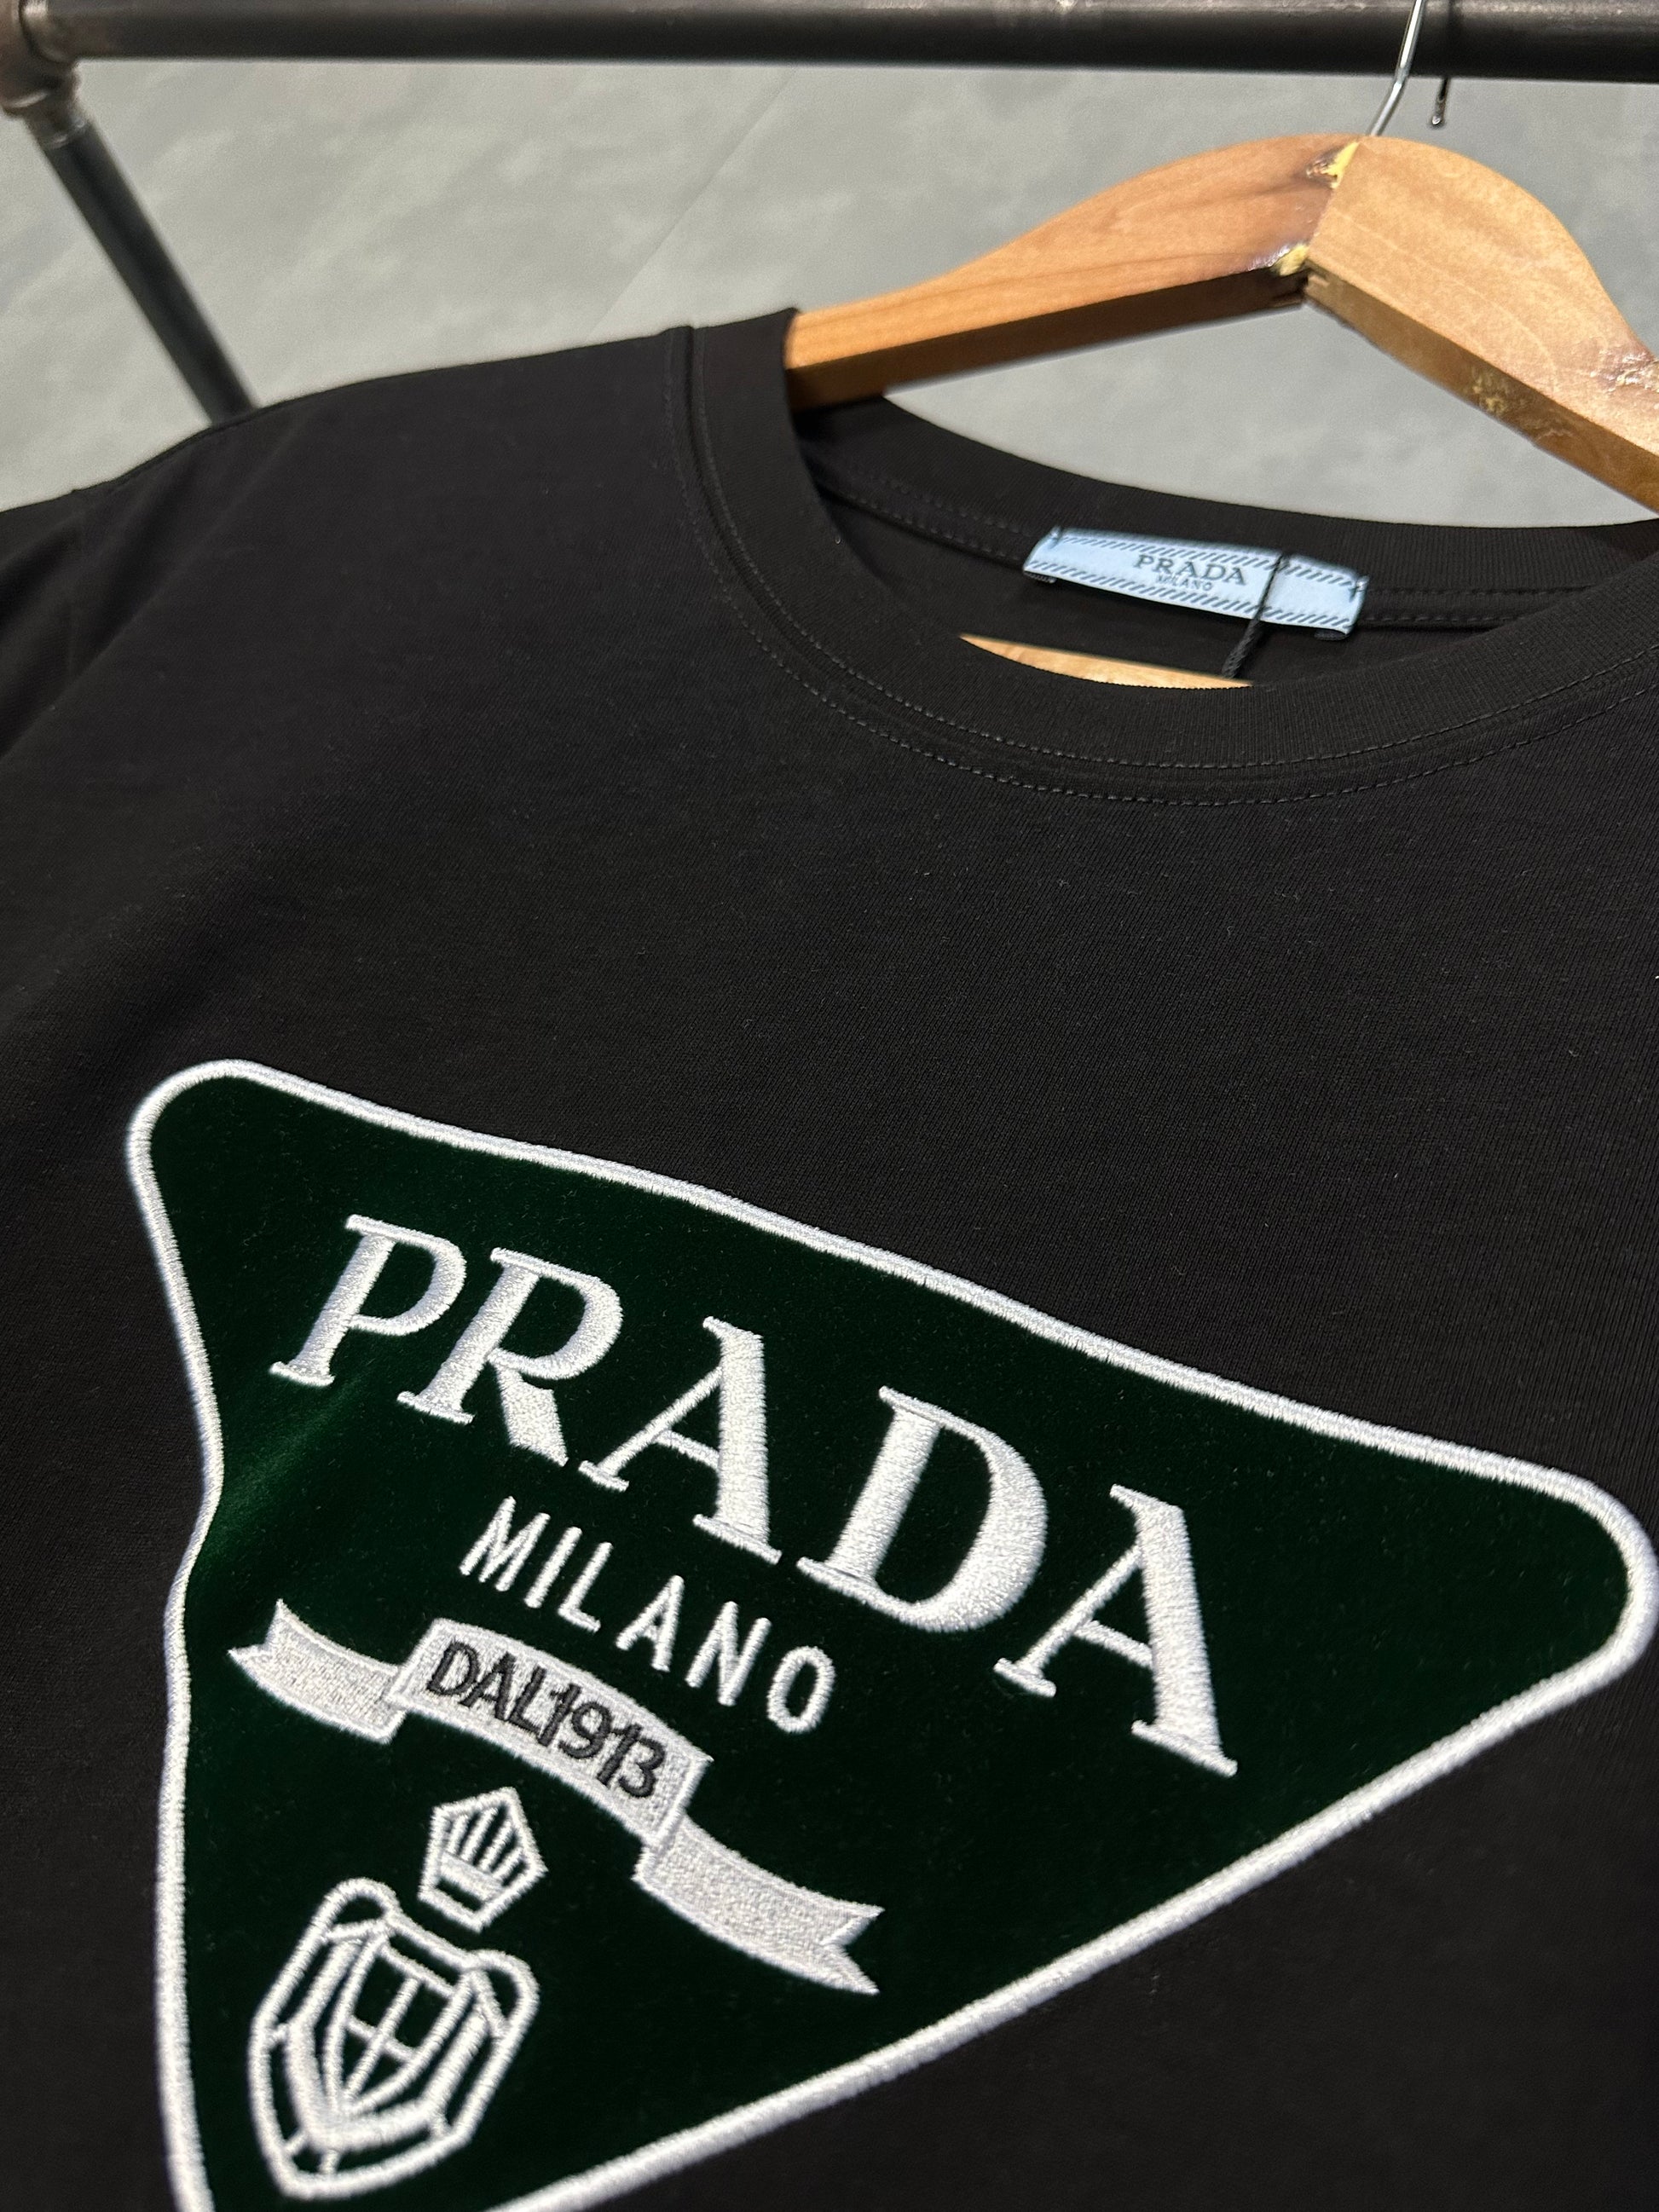 Prada Milano Dal 1913 shirt - Kingteeshop